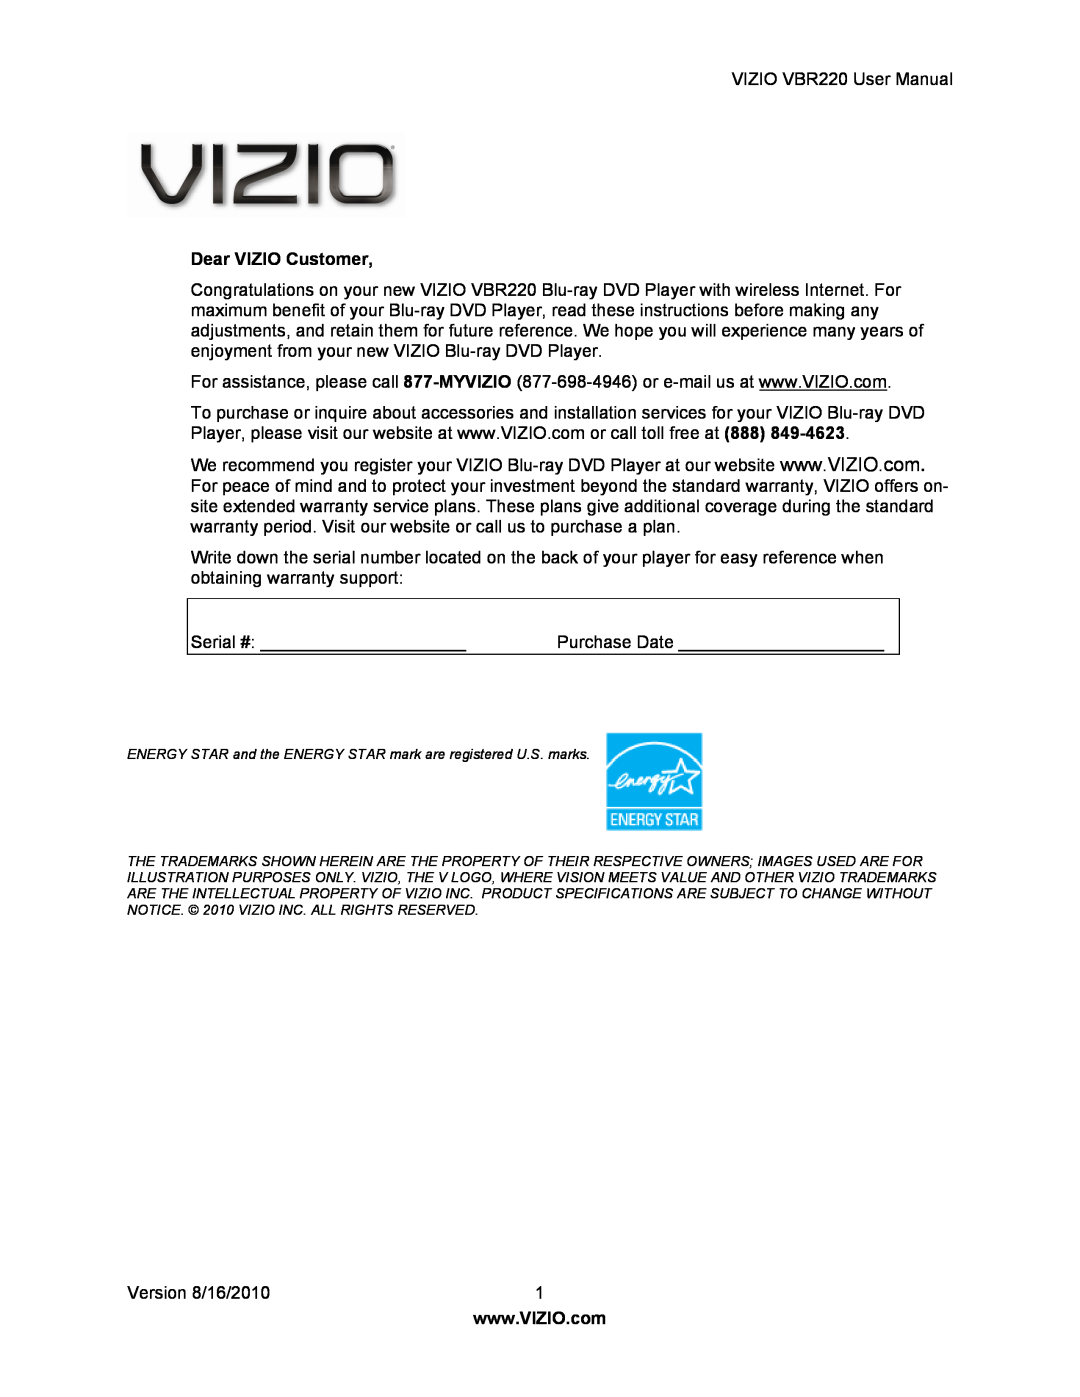 Panasonic VBR220 user manual Dear VIZIO Customer 